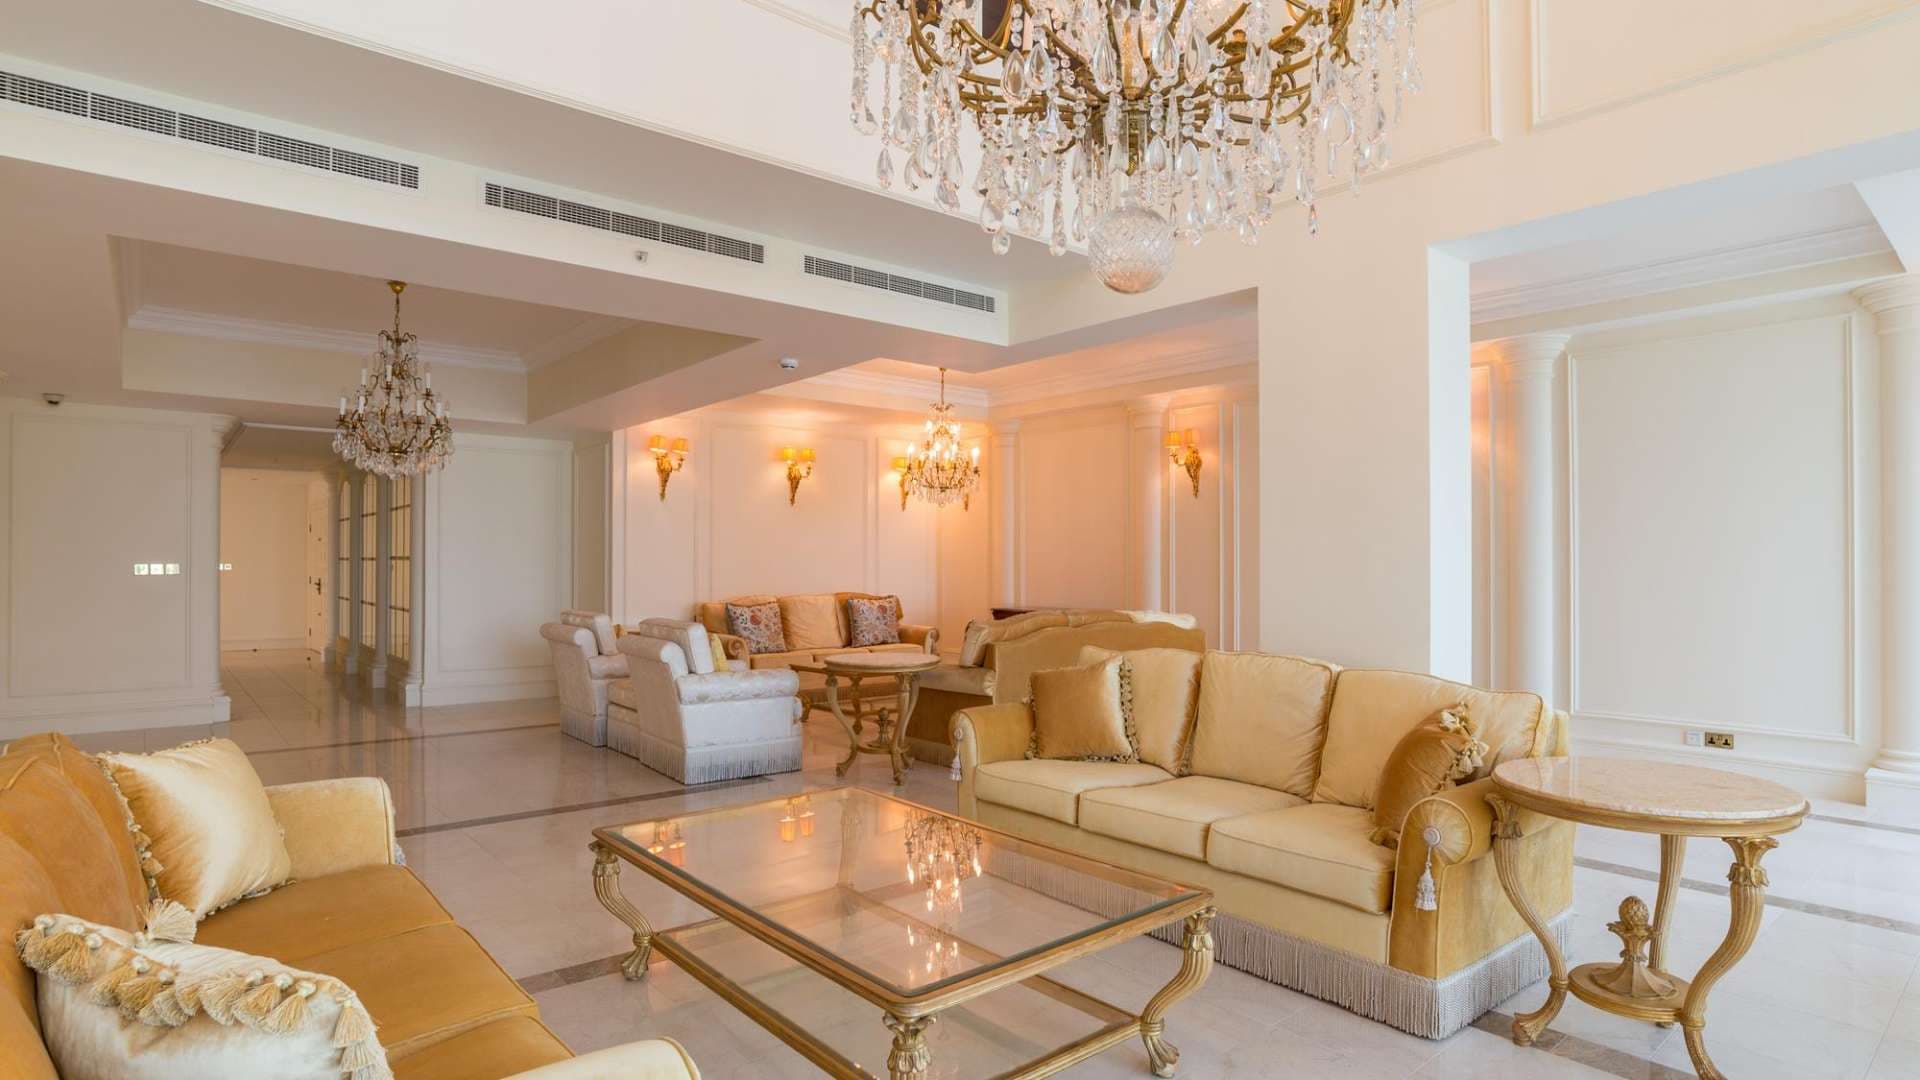 5 Bedroom Penthouse For Sale Al Anbar Tower Lp06941 D68b65a08e42e80.jpg